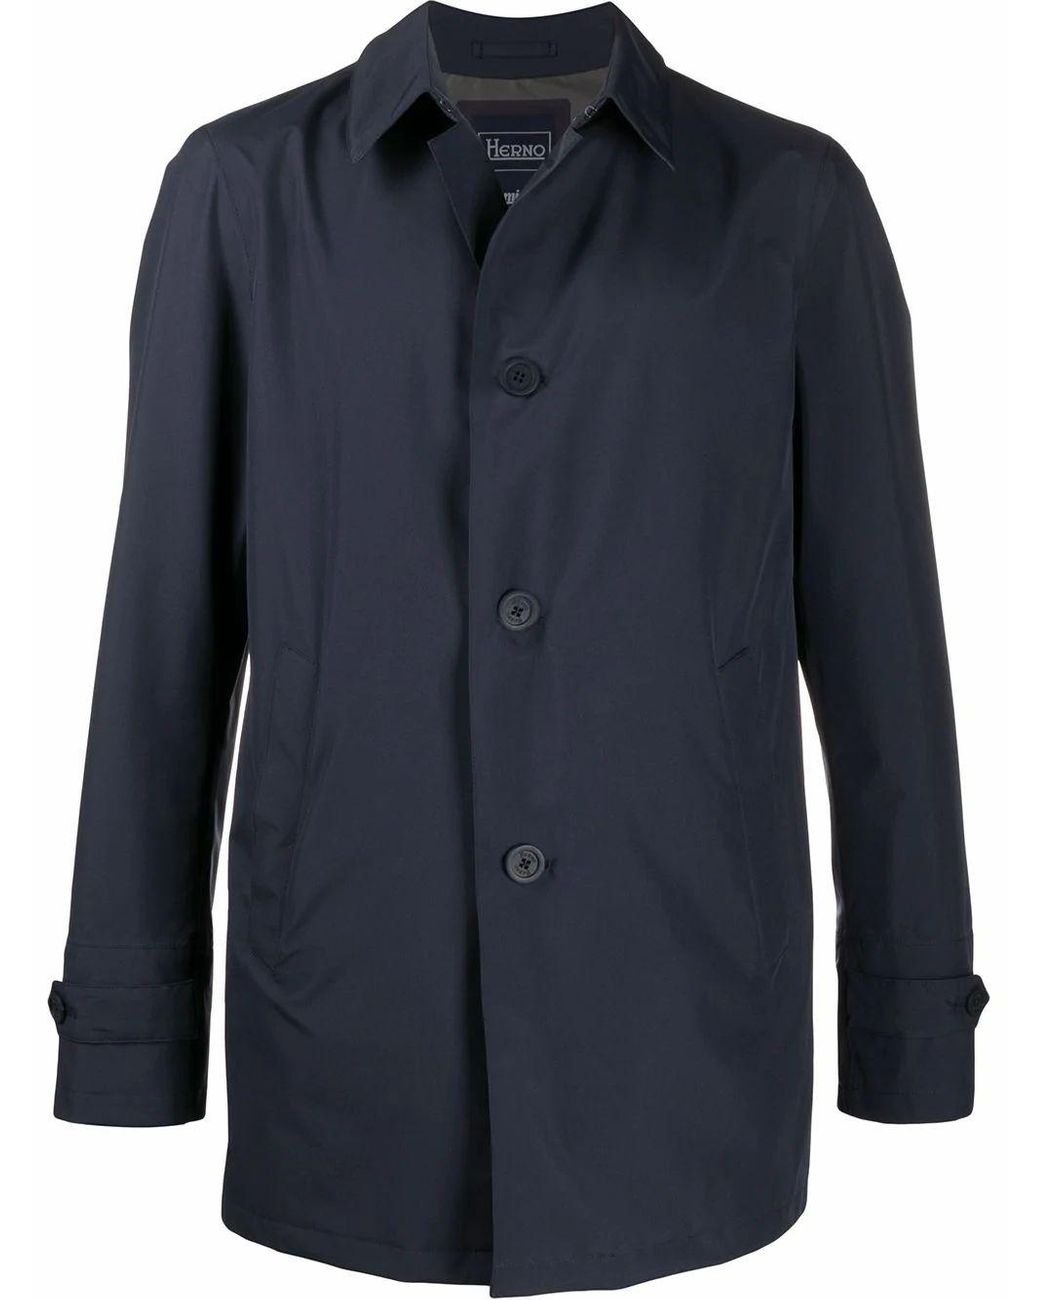 Herno Polyester Coat in Blue for Men - Lyst